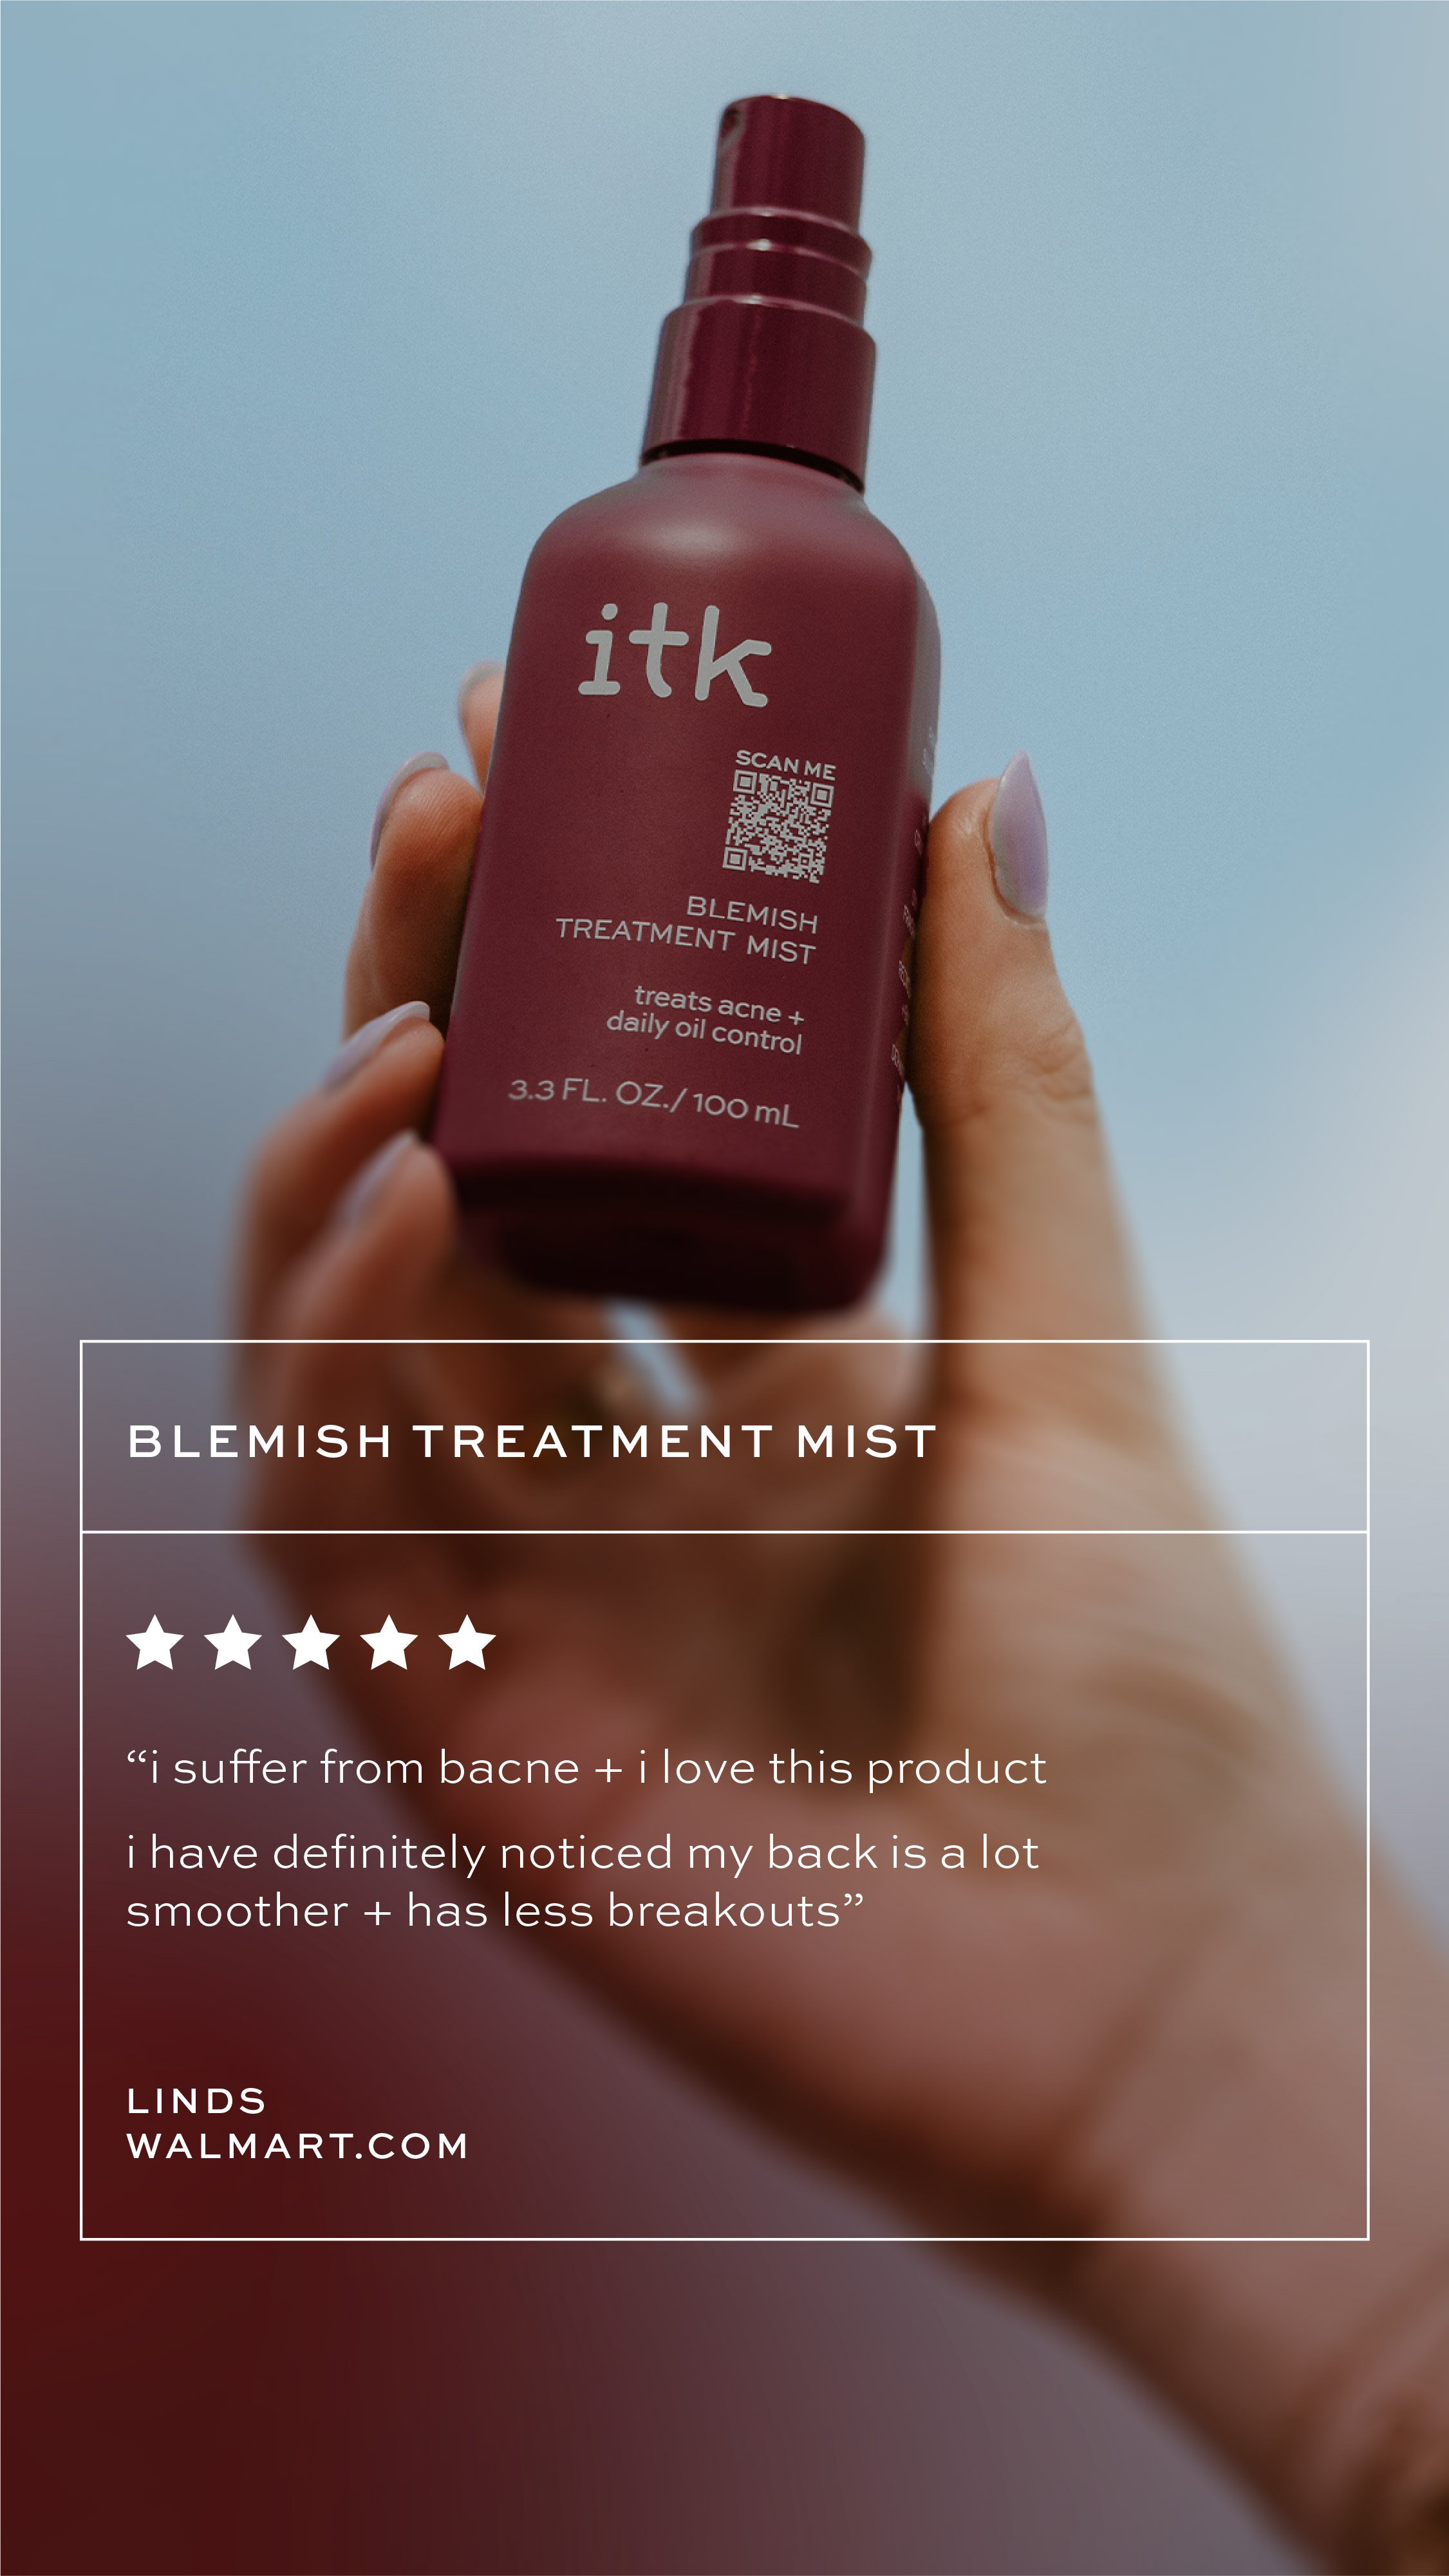 09_ITK_Social_Review-Template_Blemish-Treatment-Mist-02.jpg